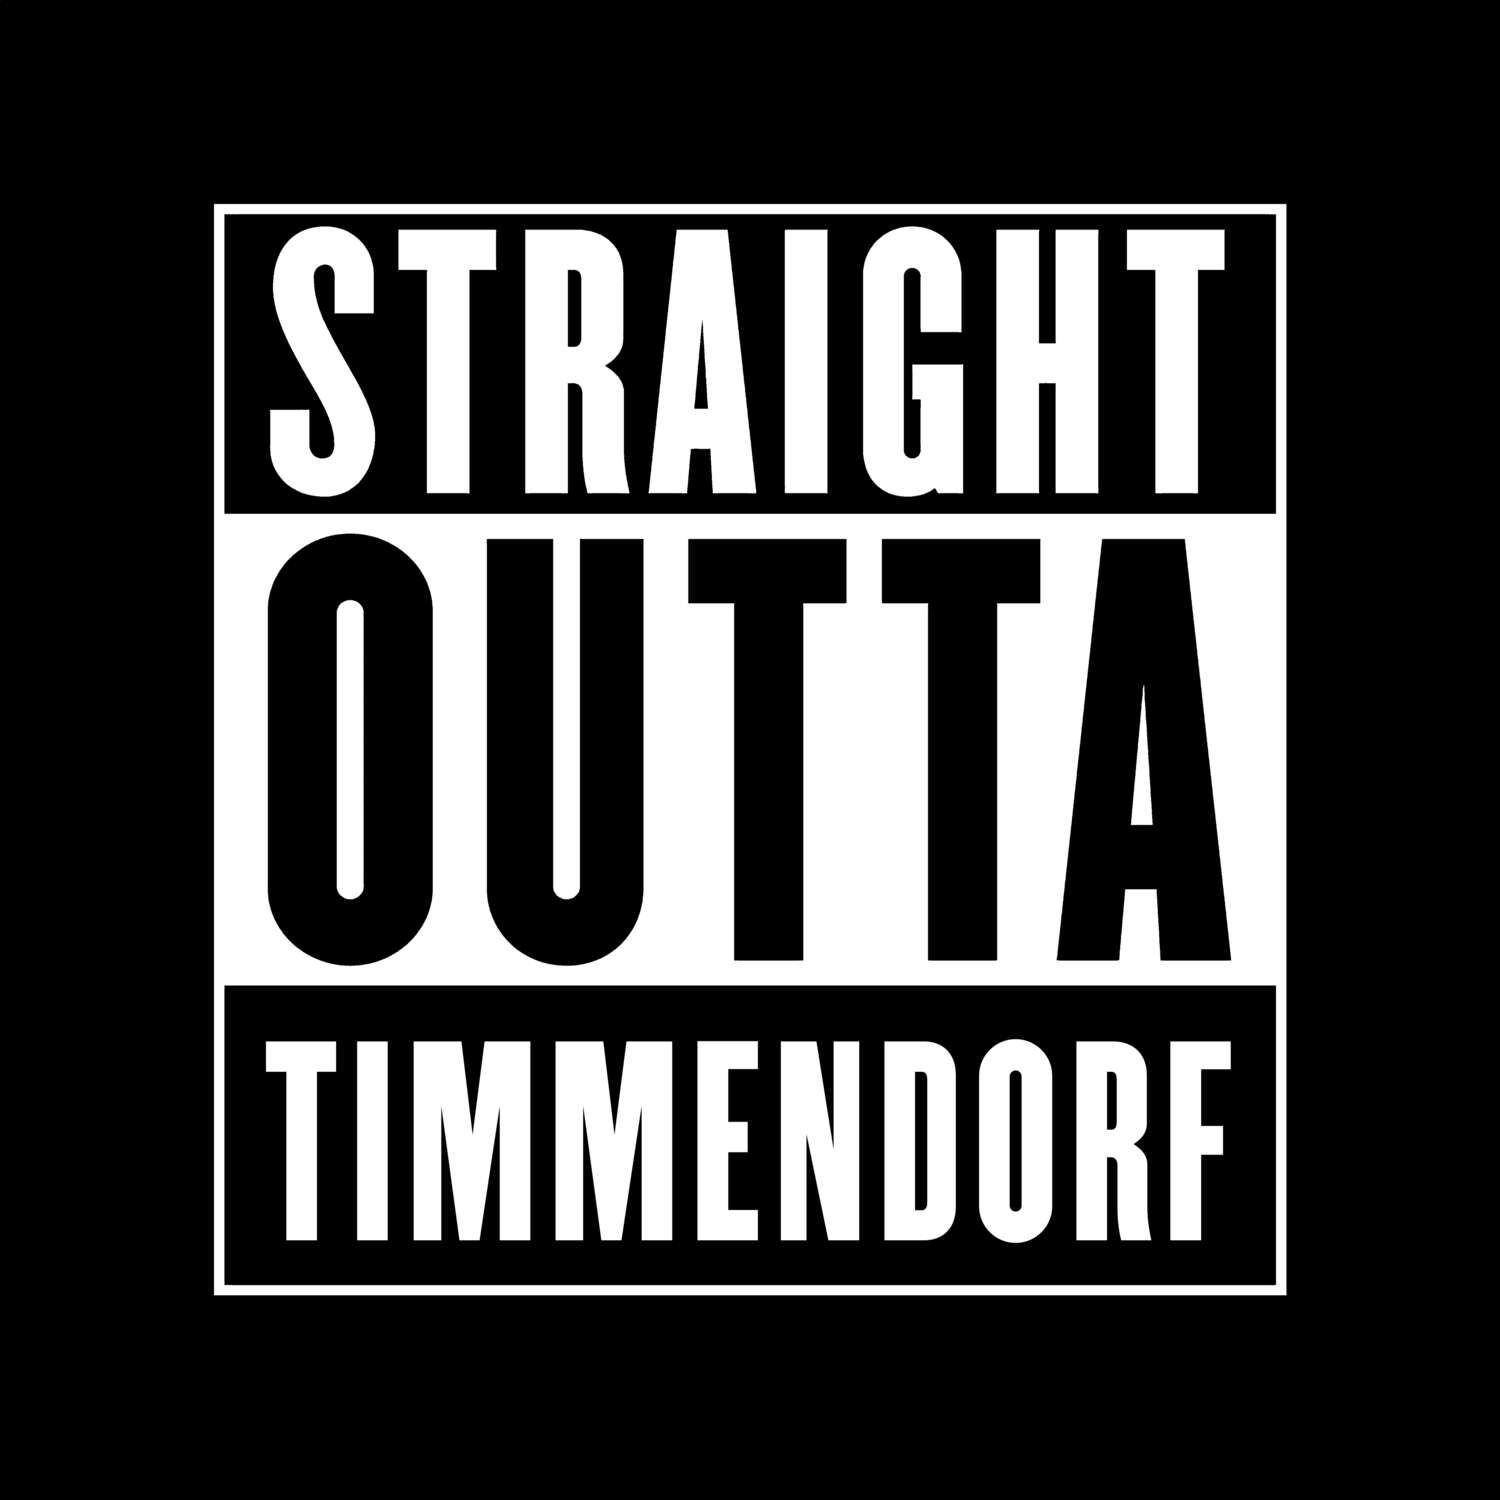 Timmendorf T-Shirt »Straight Outta«